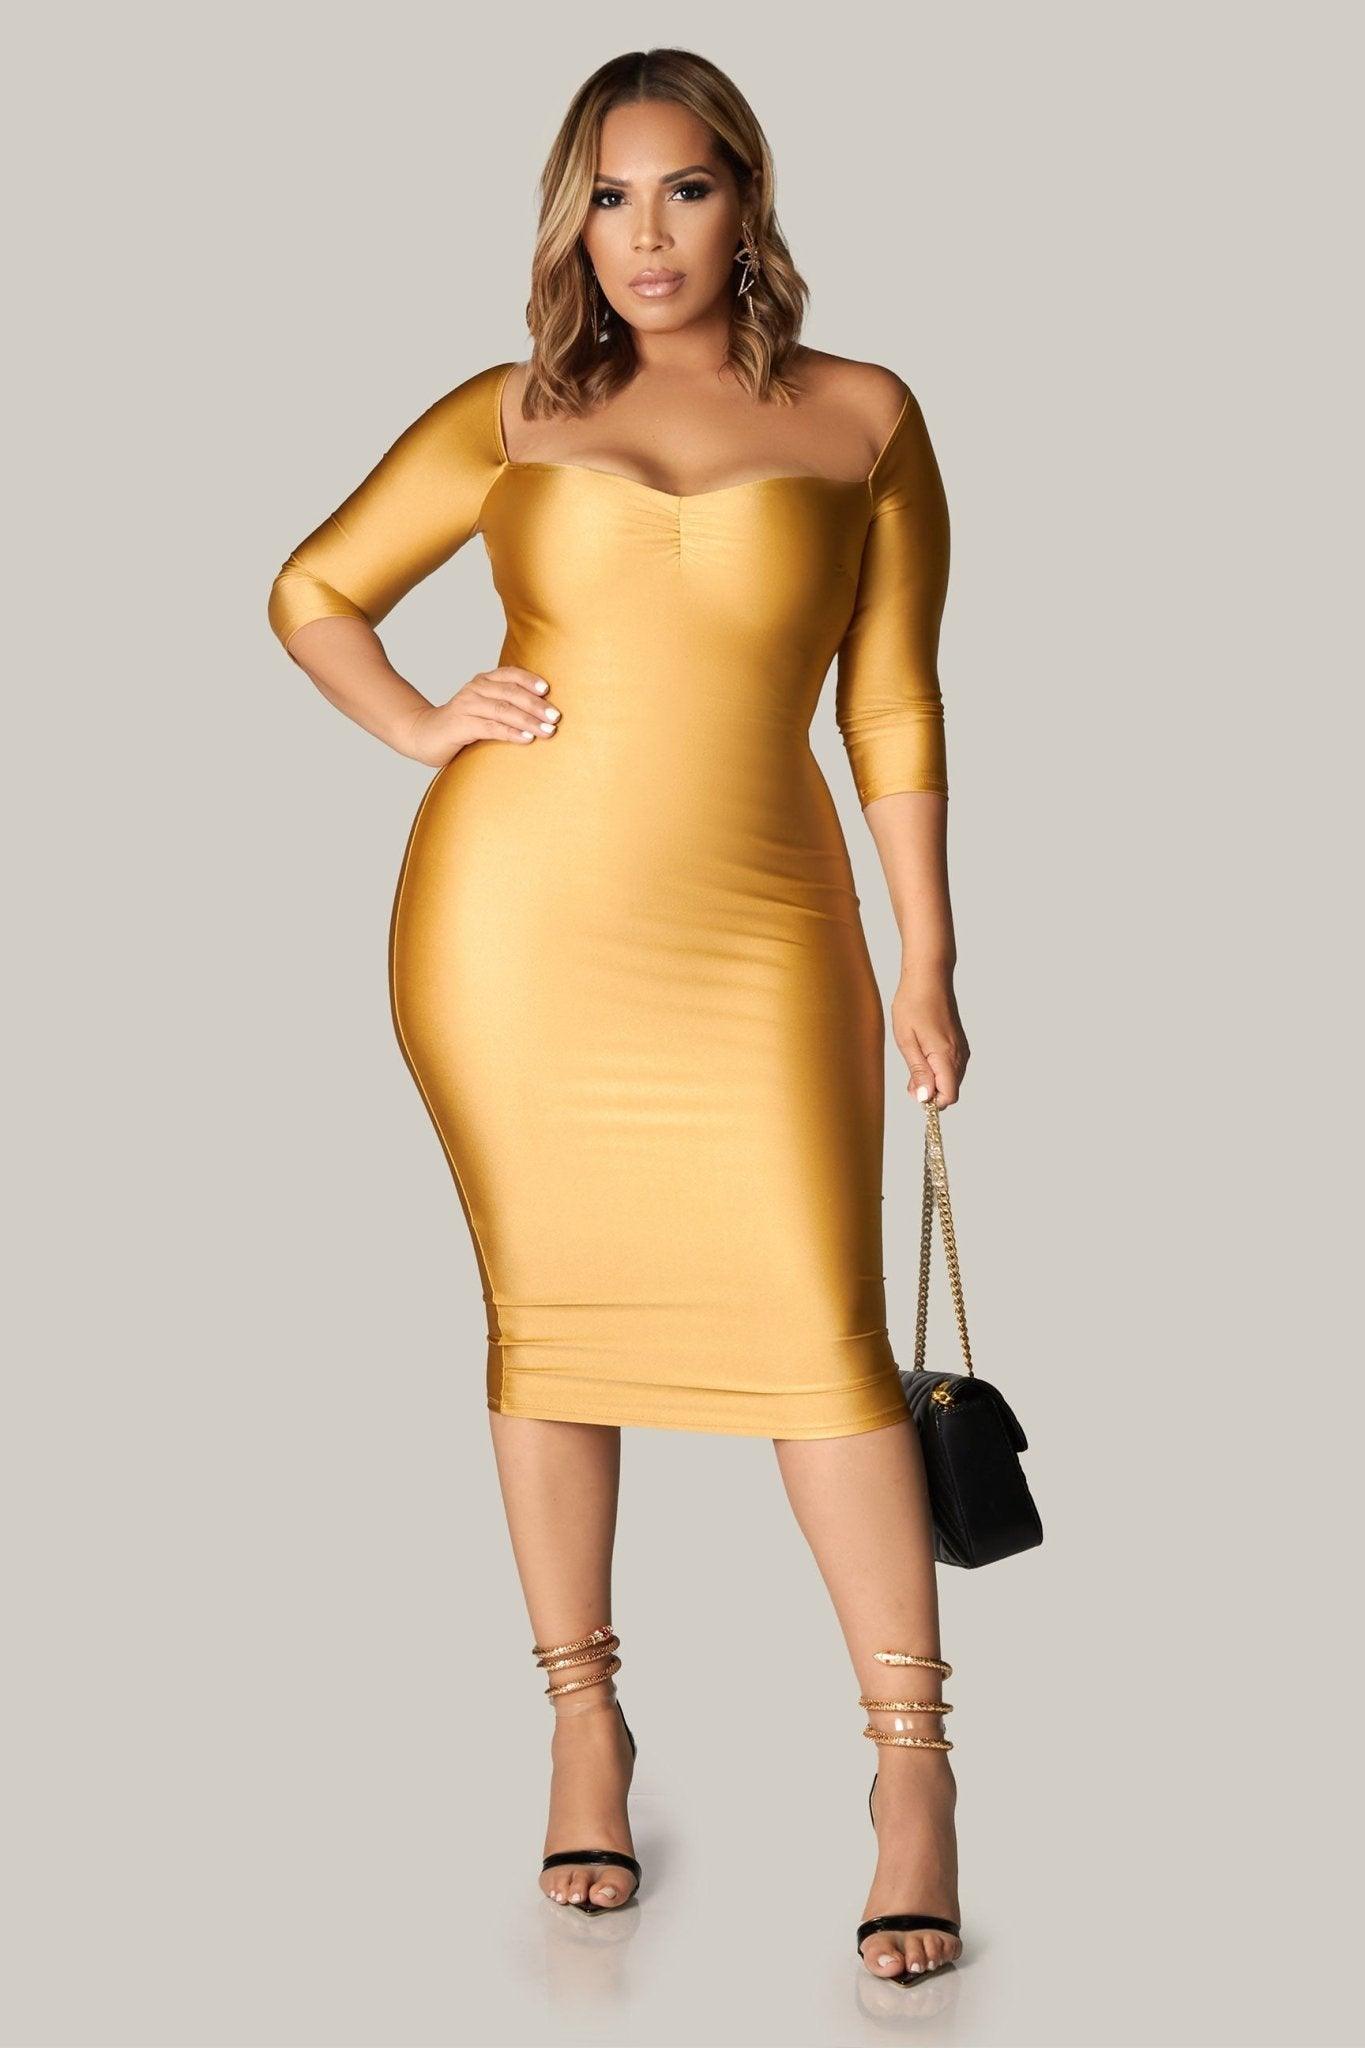 Bethany Slimming Midi Dress - MY SEXY STYLES